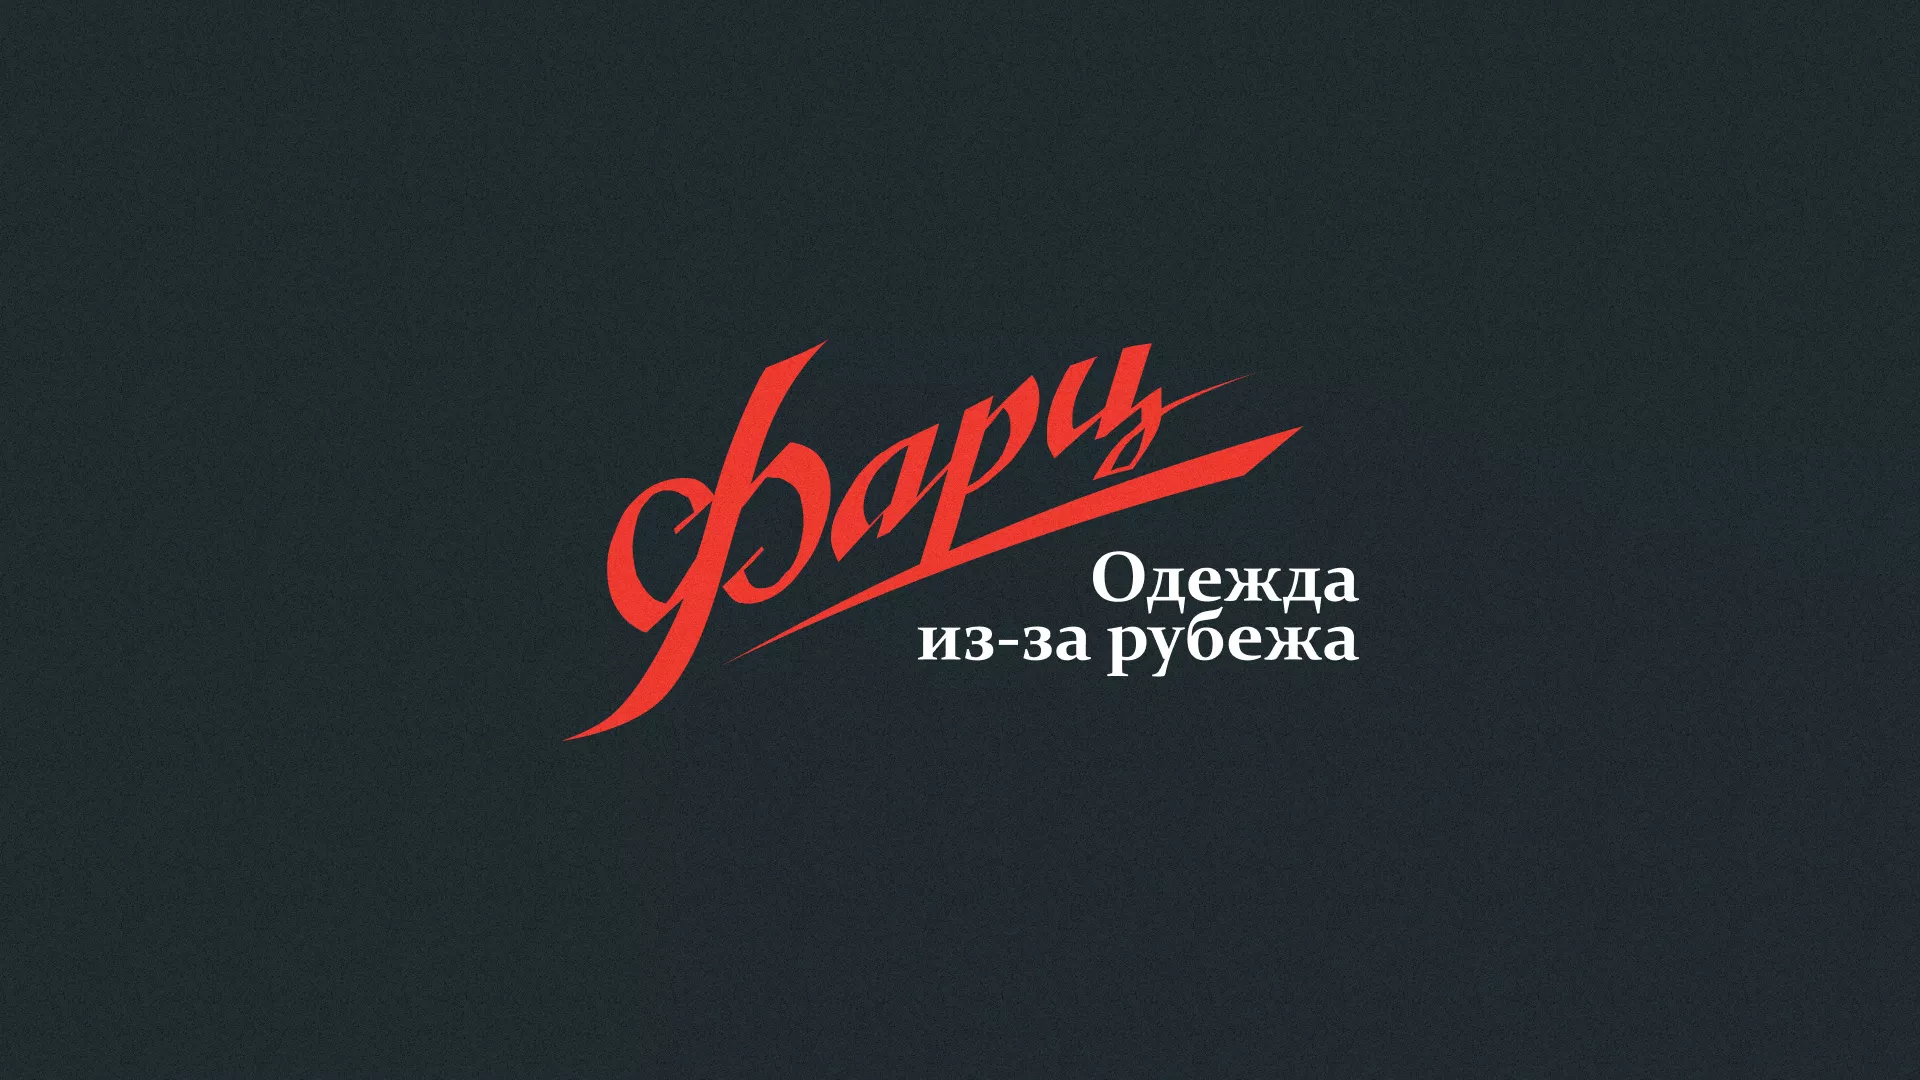 Разработка логотипа магазина «Фарц» в Ожерелье